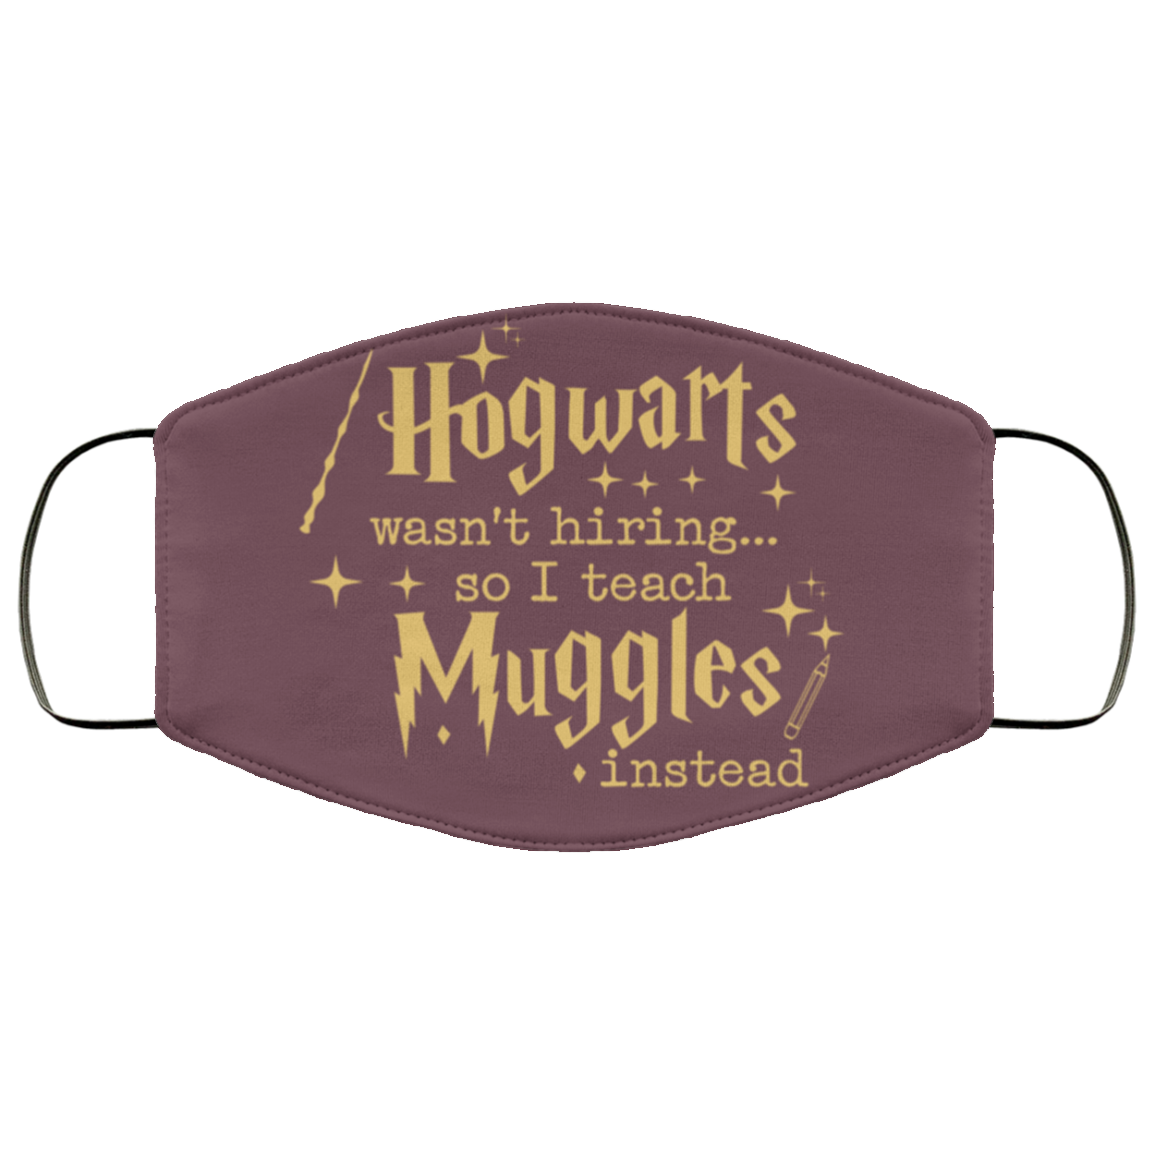 Hogwarts Wasn’t Hiring So I Teach Muggles Instead Face Mask